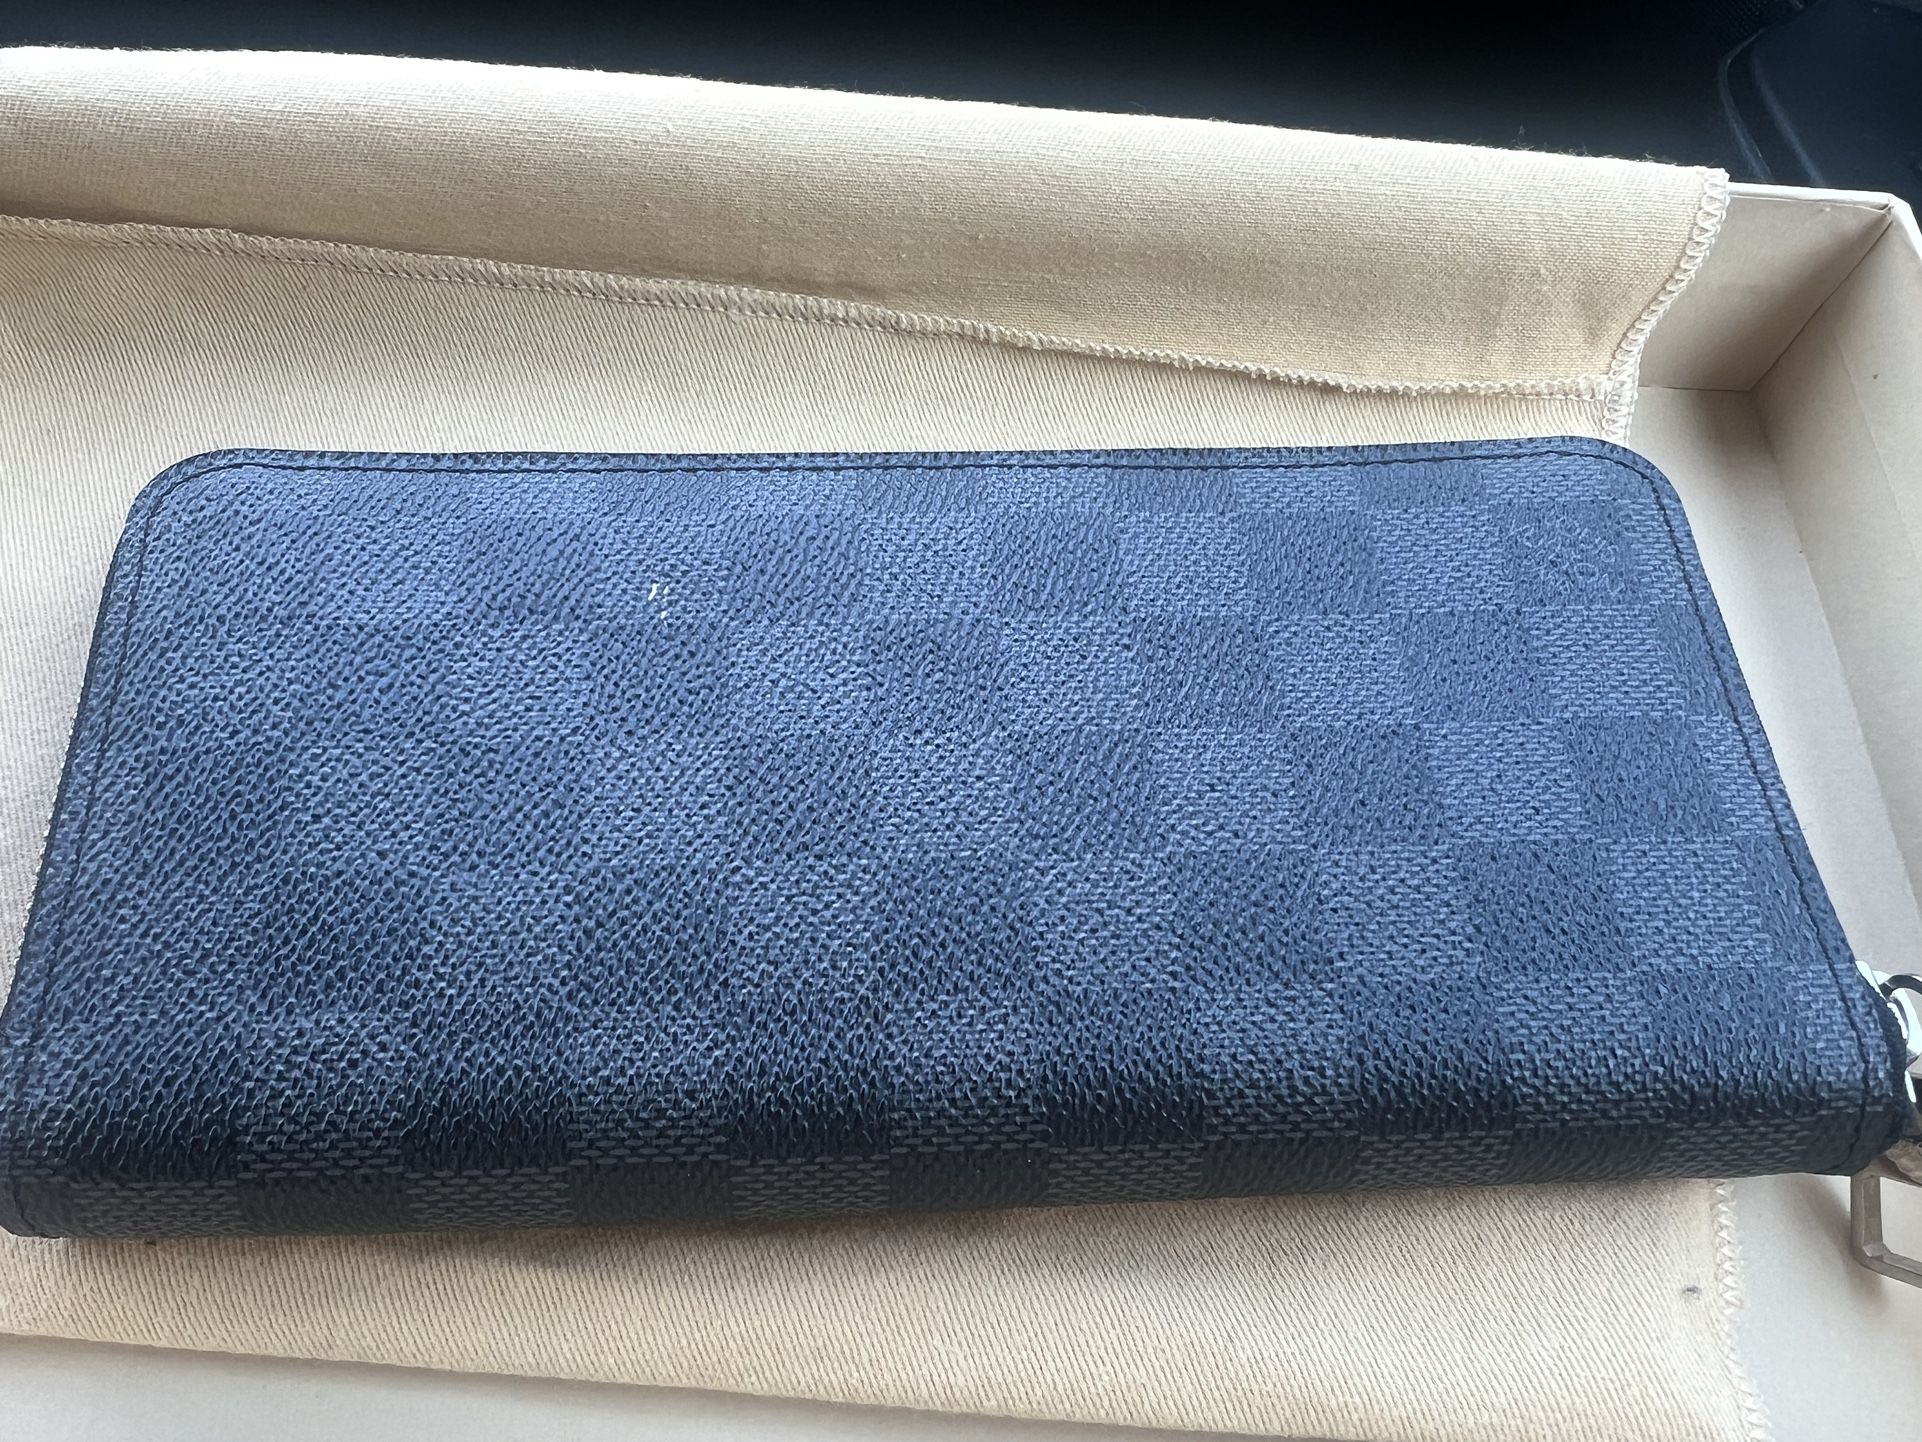 Louis Vuitton Damier Zip Around Long Wallet 